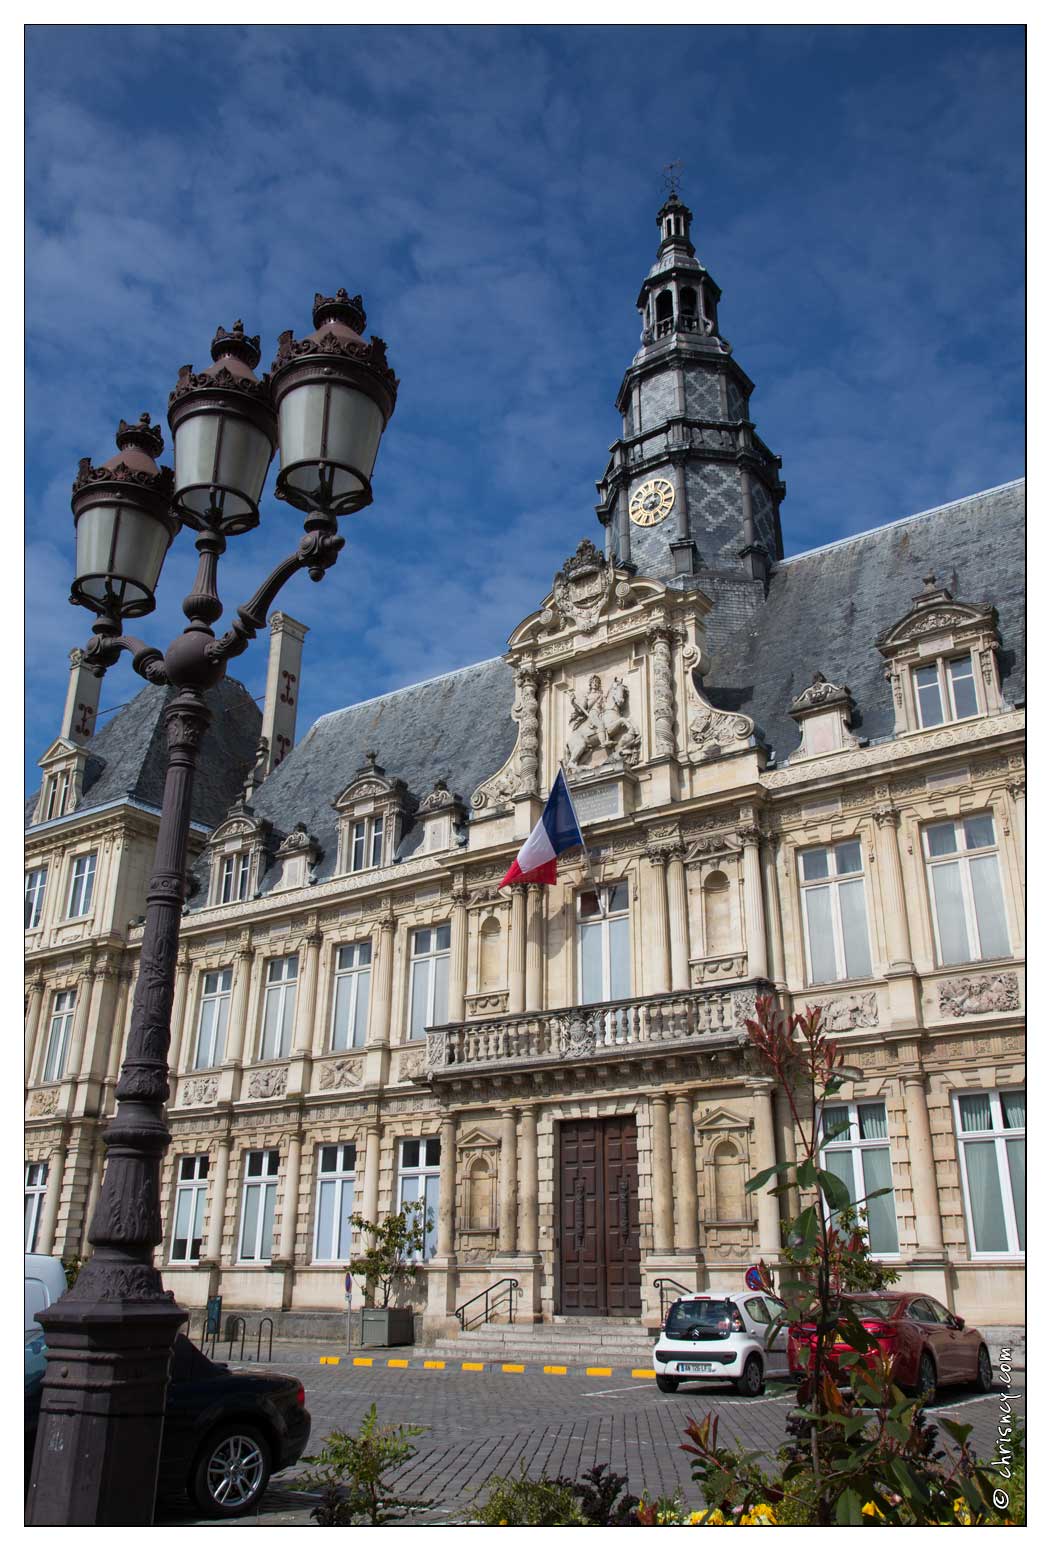 20150406-24_0198-Reims_Hotel_de_ville.jpg